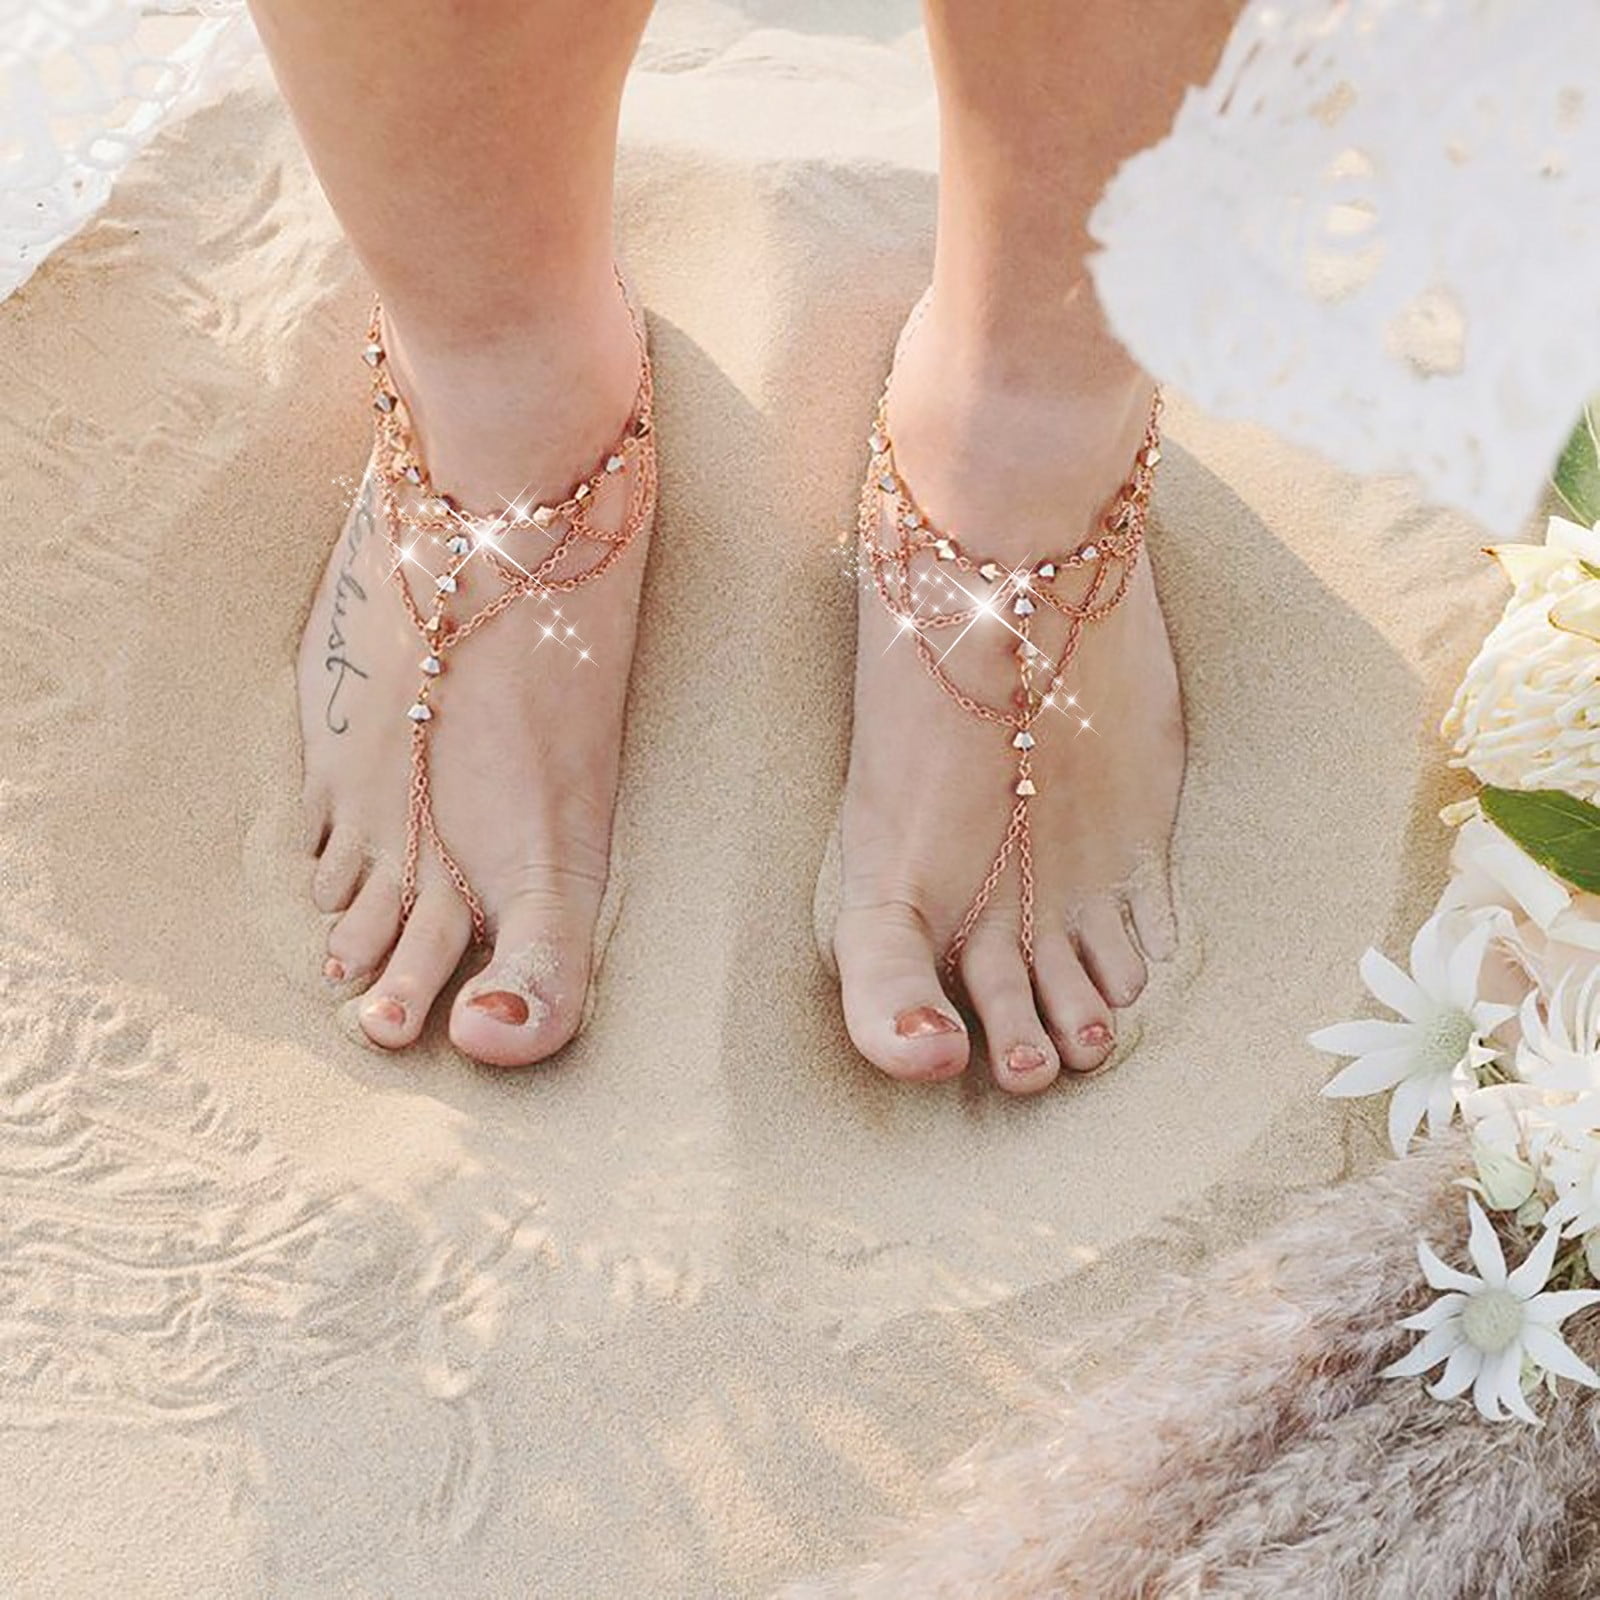 Modyle 3pcs/set Anklets for Women Foot Accessories Summer Beach